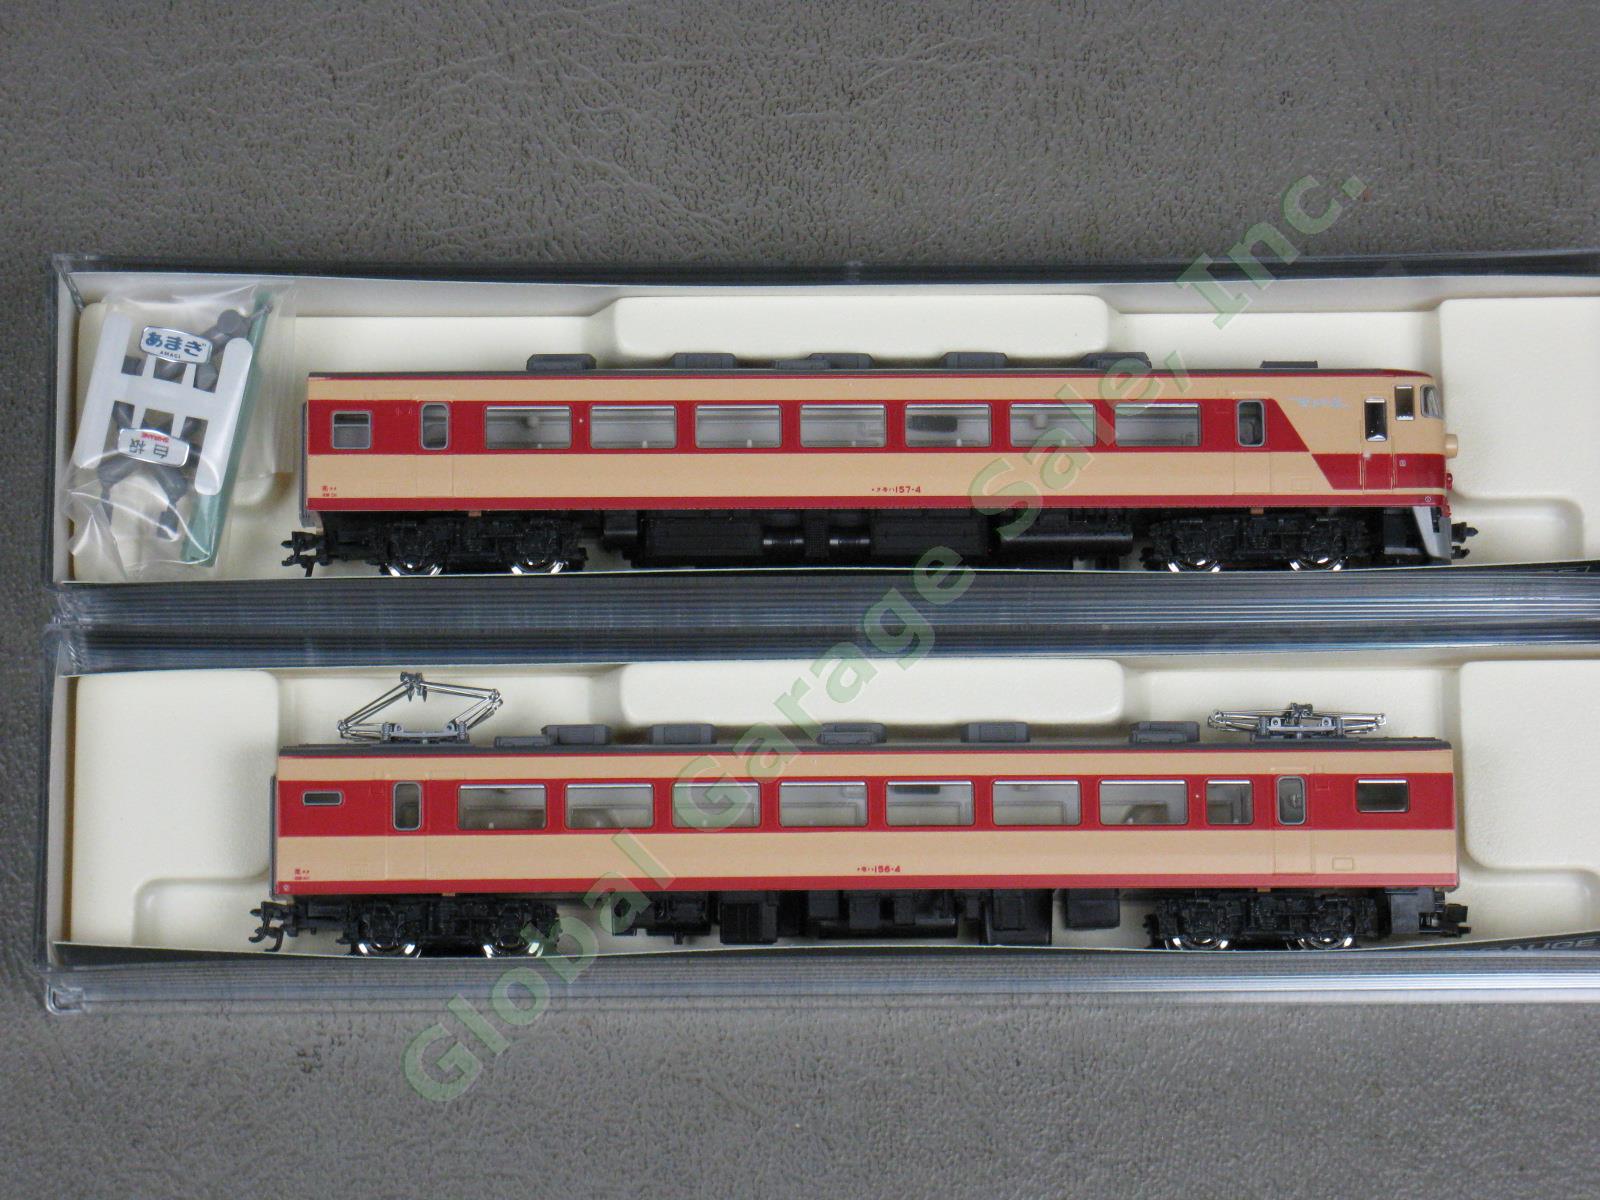 NIB Kato N Train Lot 10-394 Amagi 157 Passenger Cars 8042-2 Container Wagons ++ 1